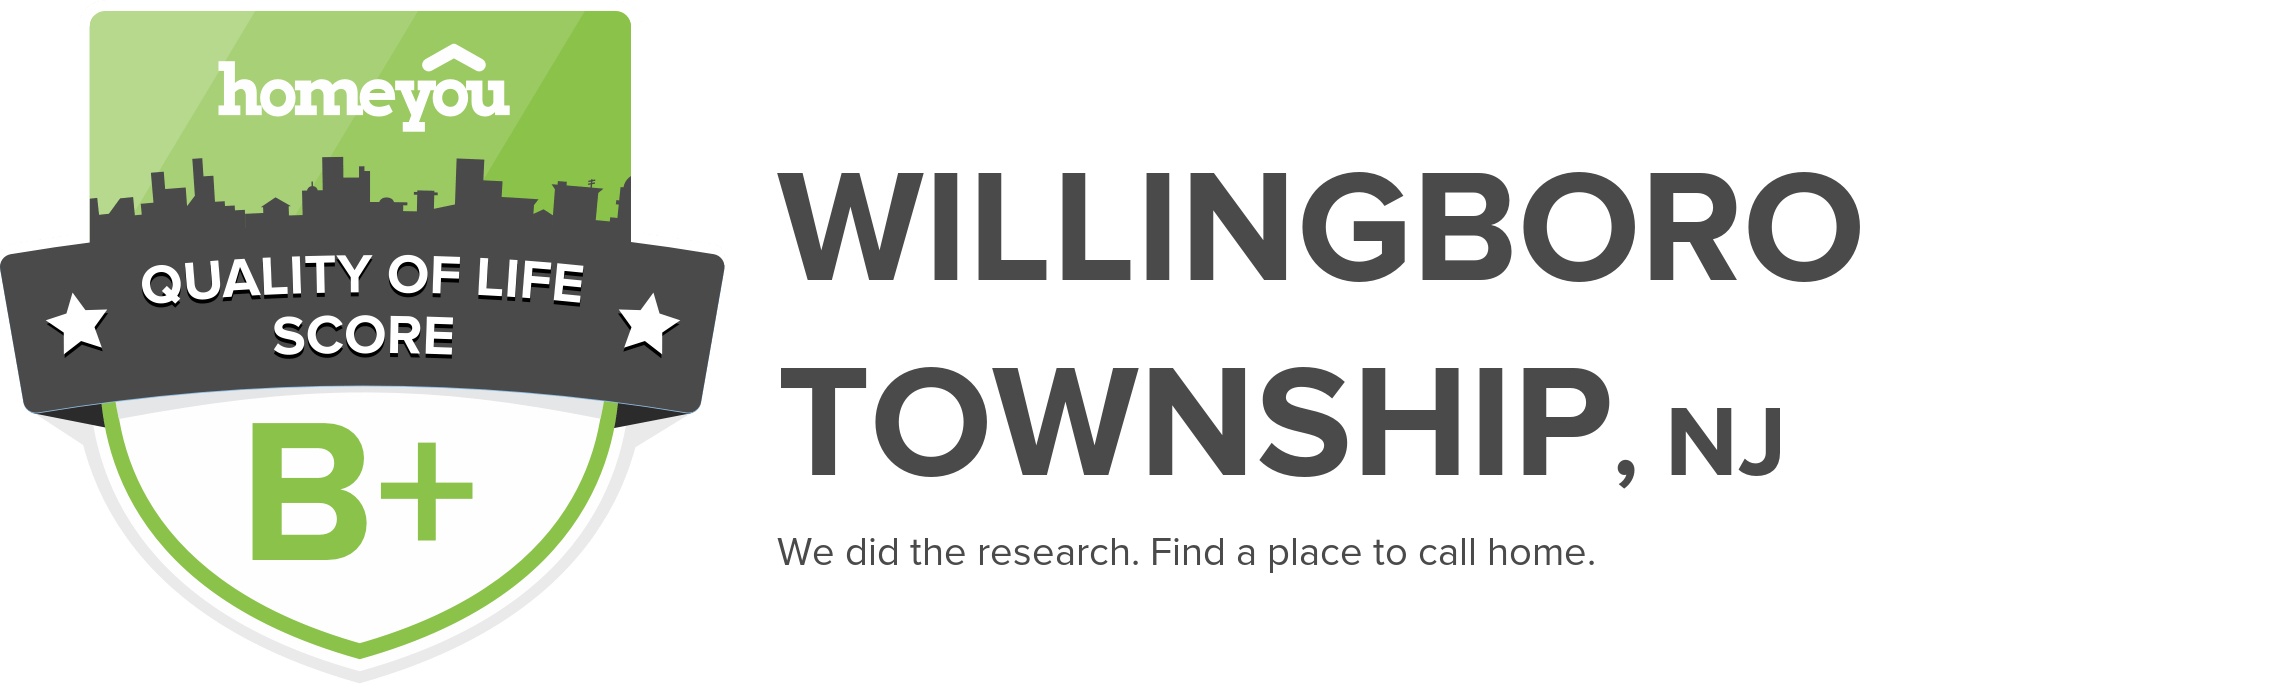 Willingboro Township, NJ